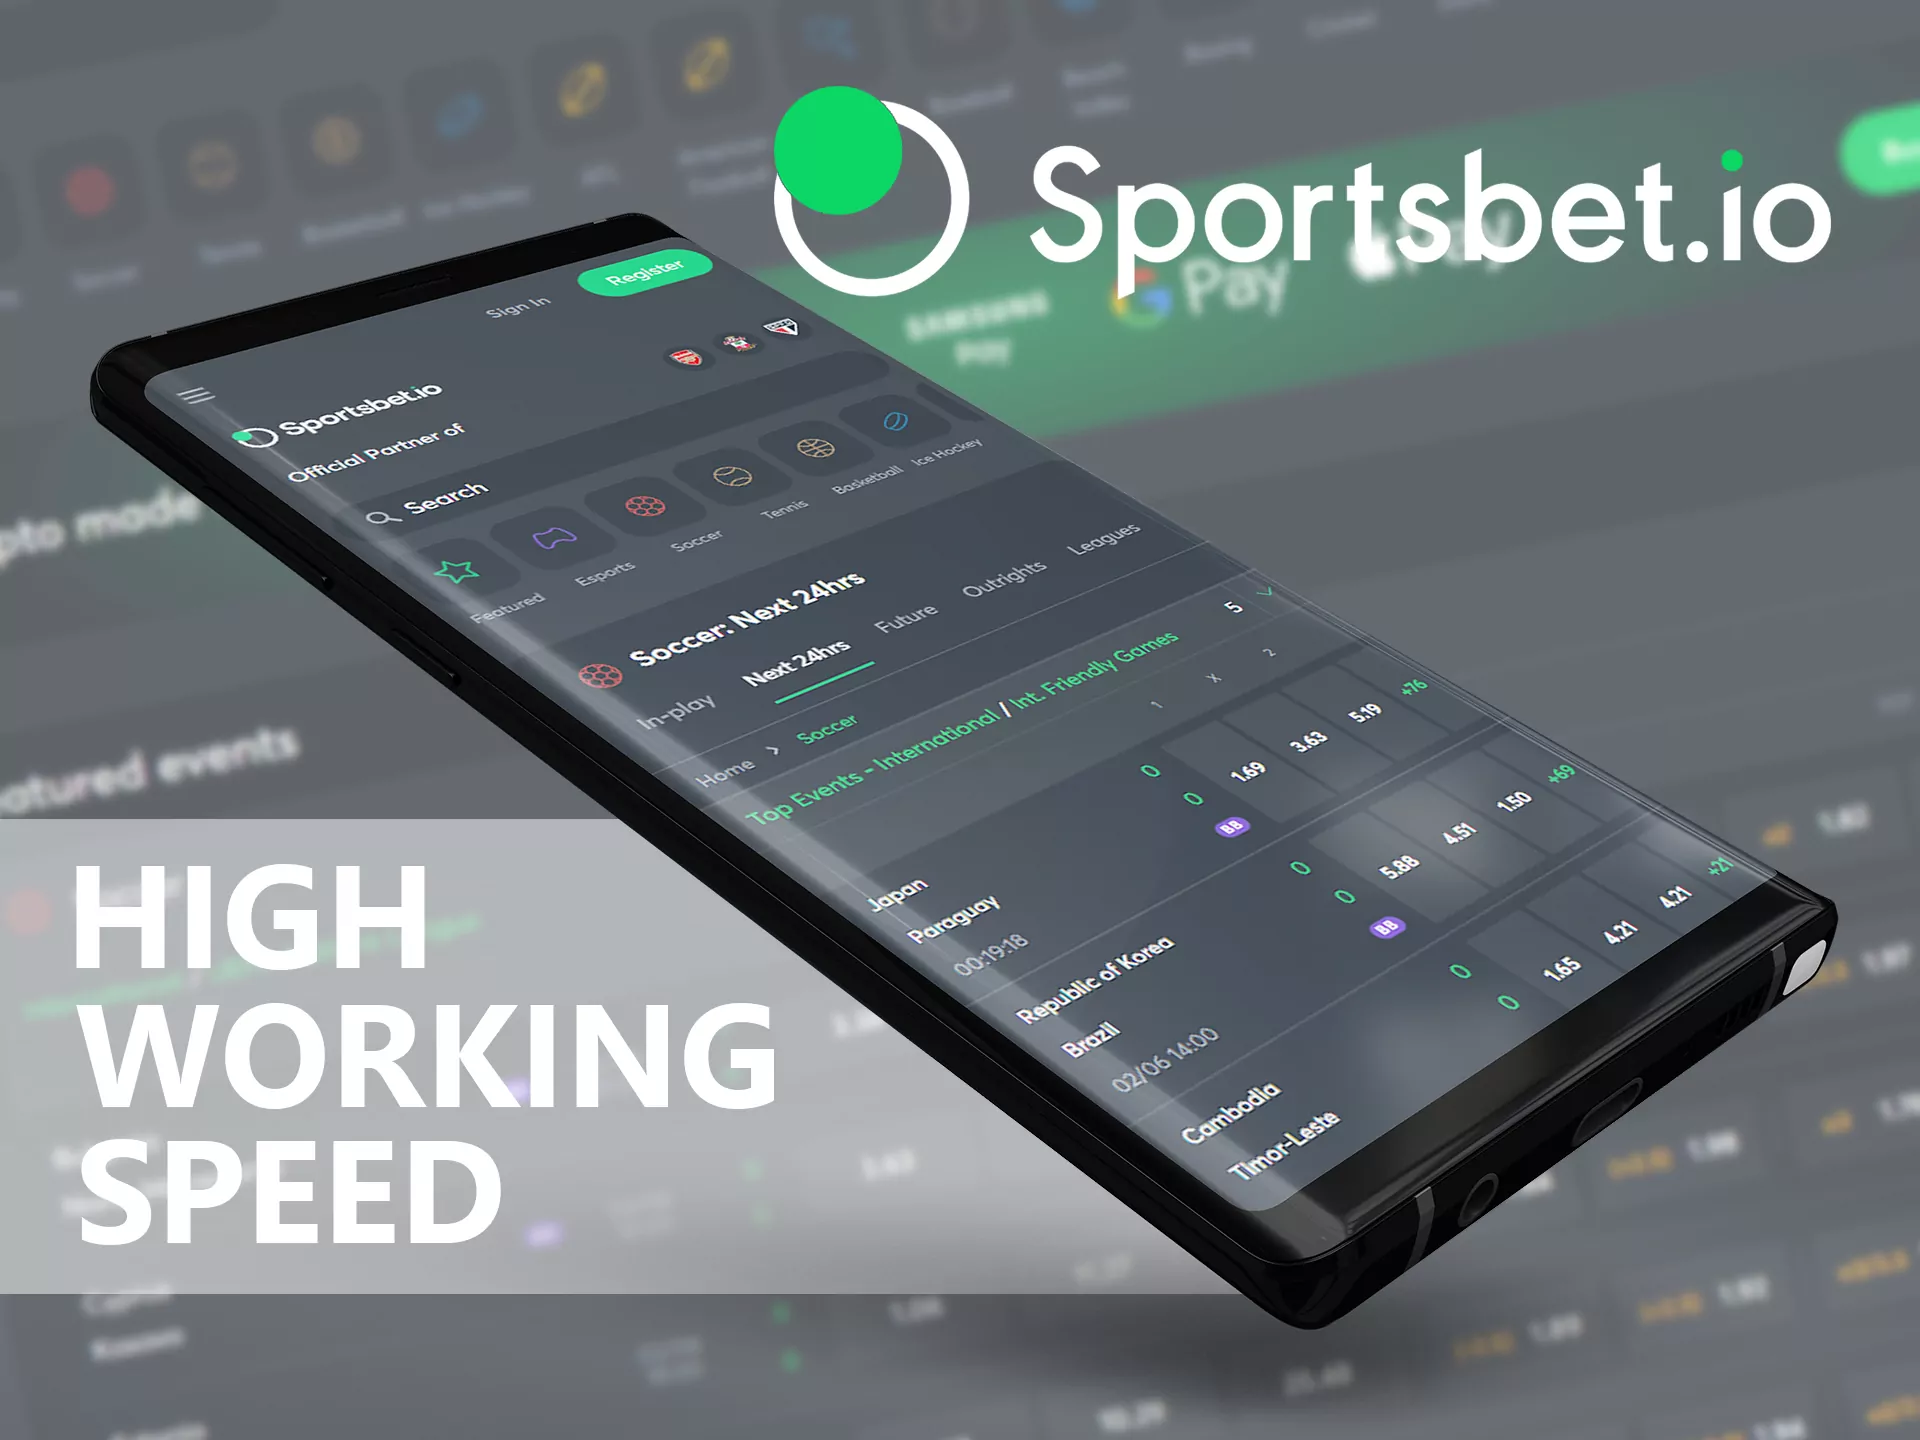 Sportsbet app operates really fast.